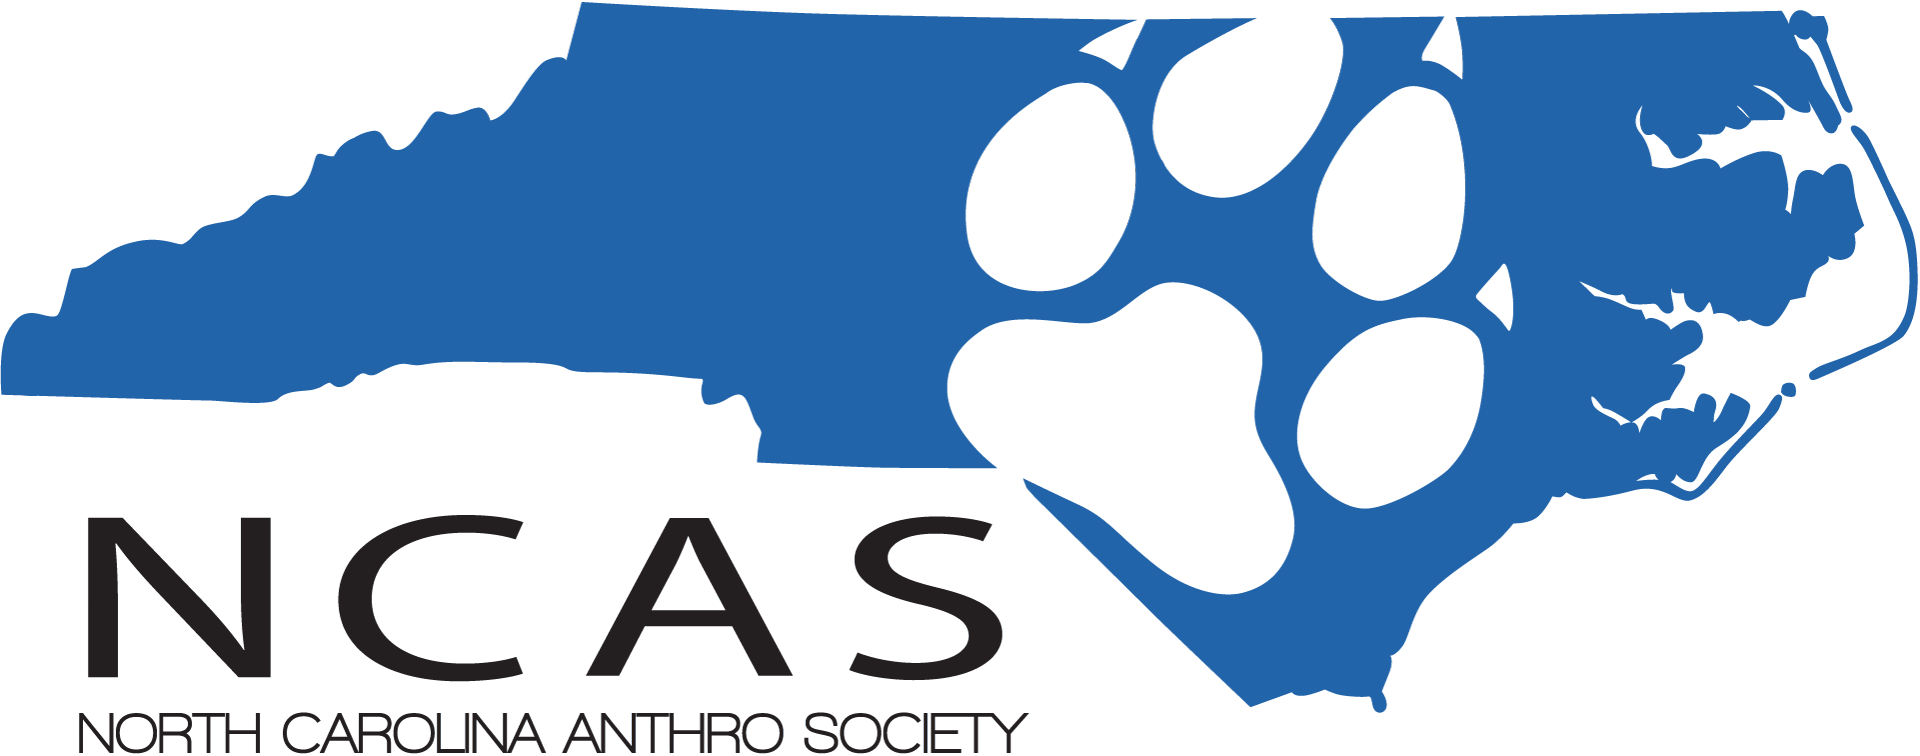 NCAS North Carolina Anthro Society Logo